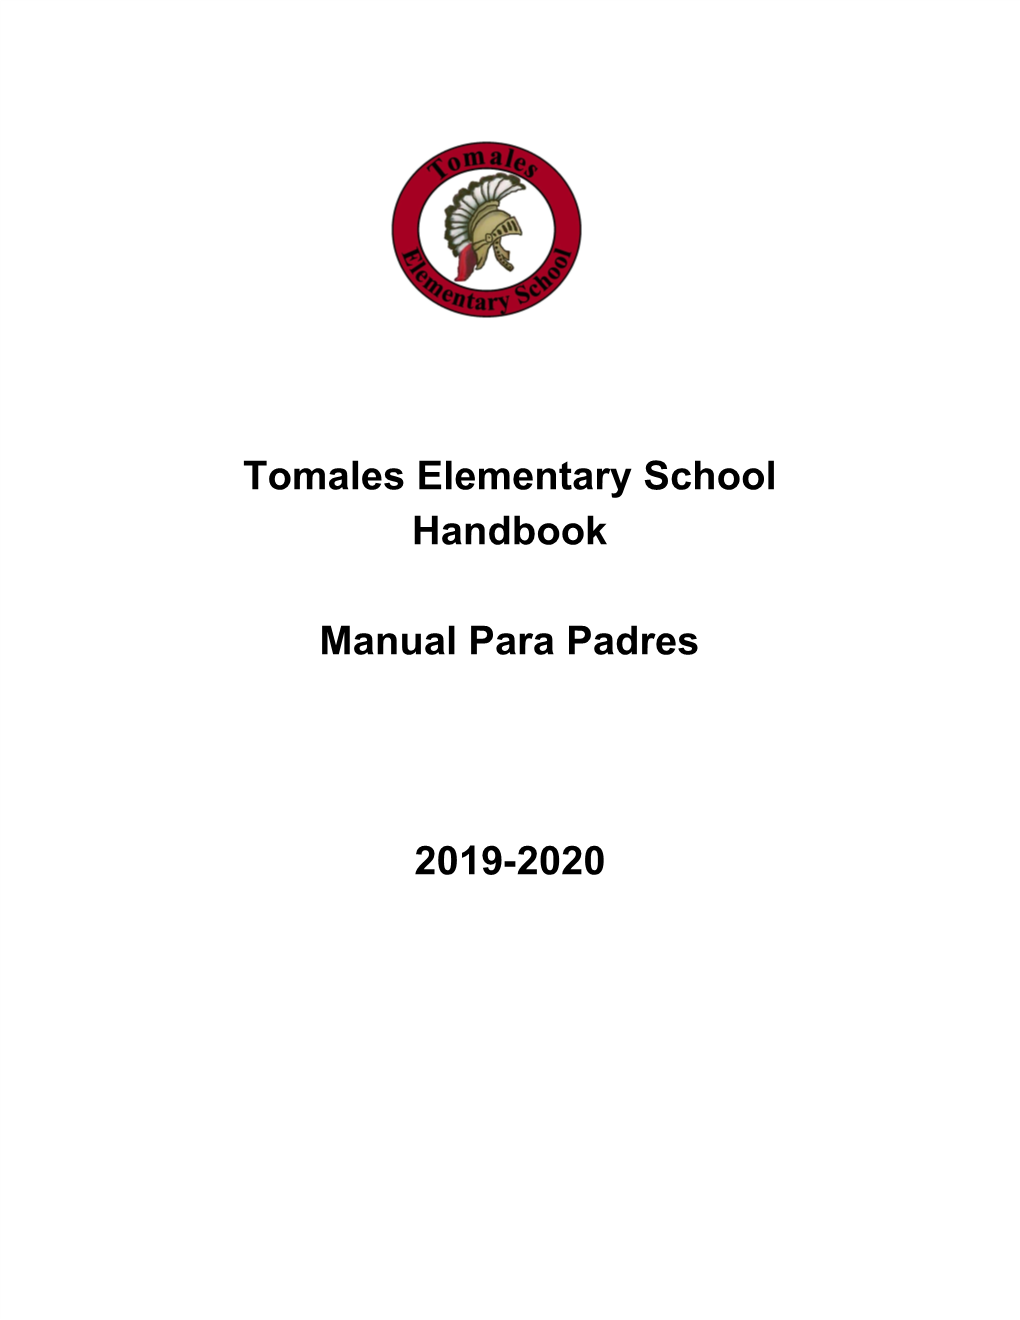 Tomales Elementary School Handbook Manual Para Padres